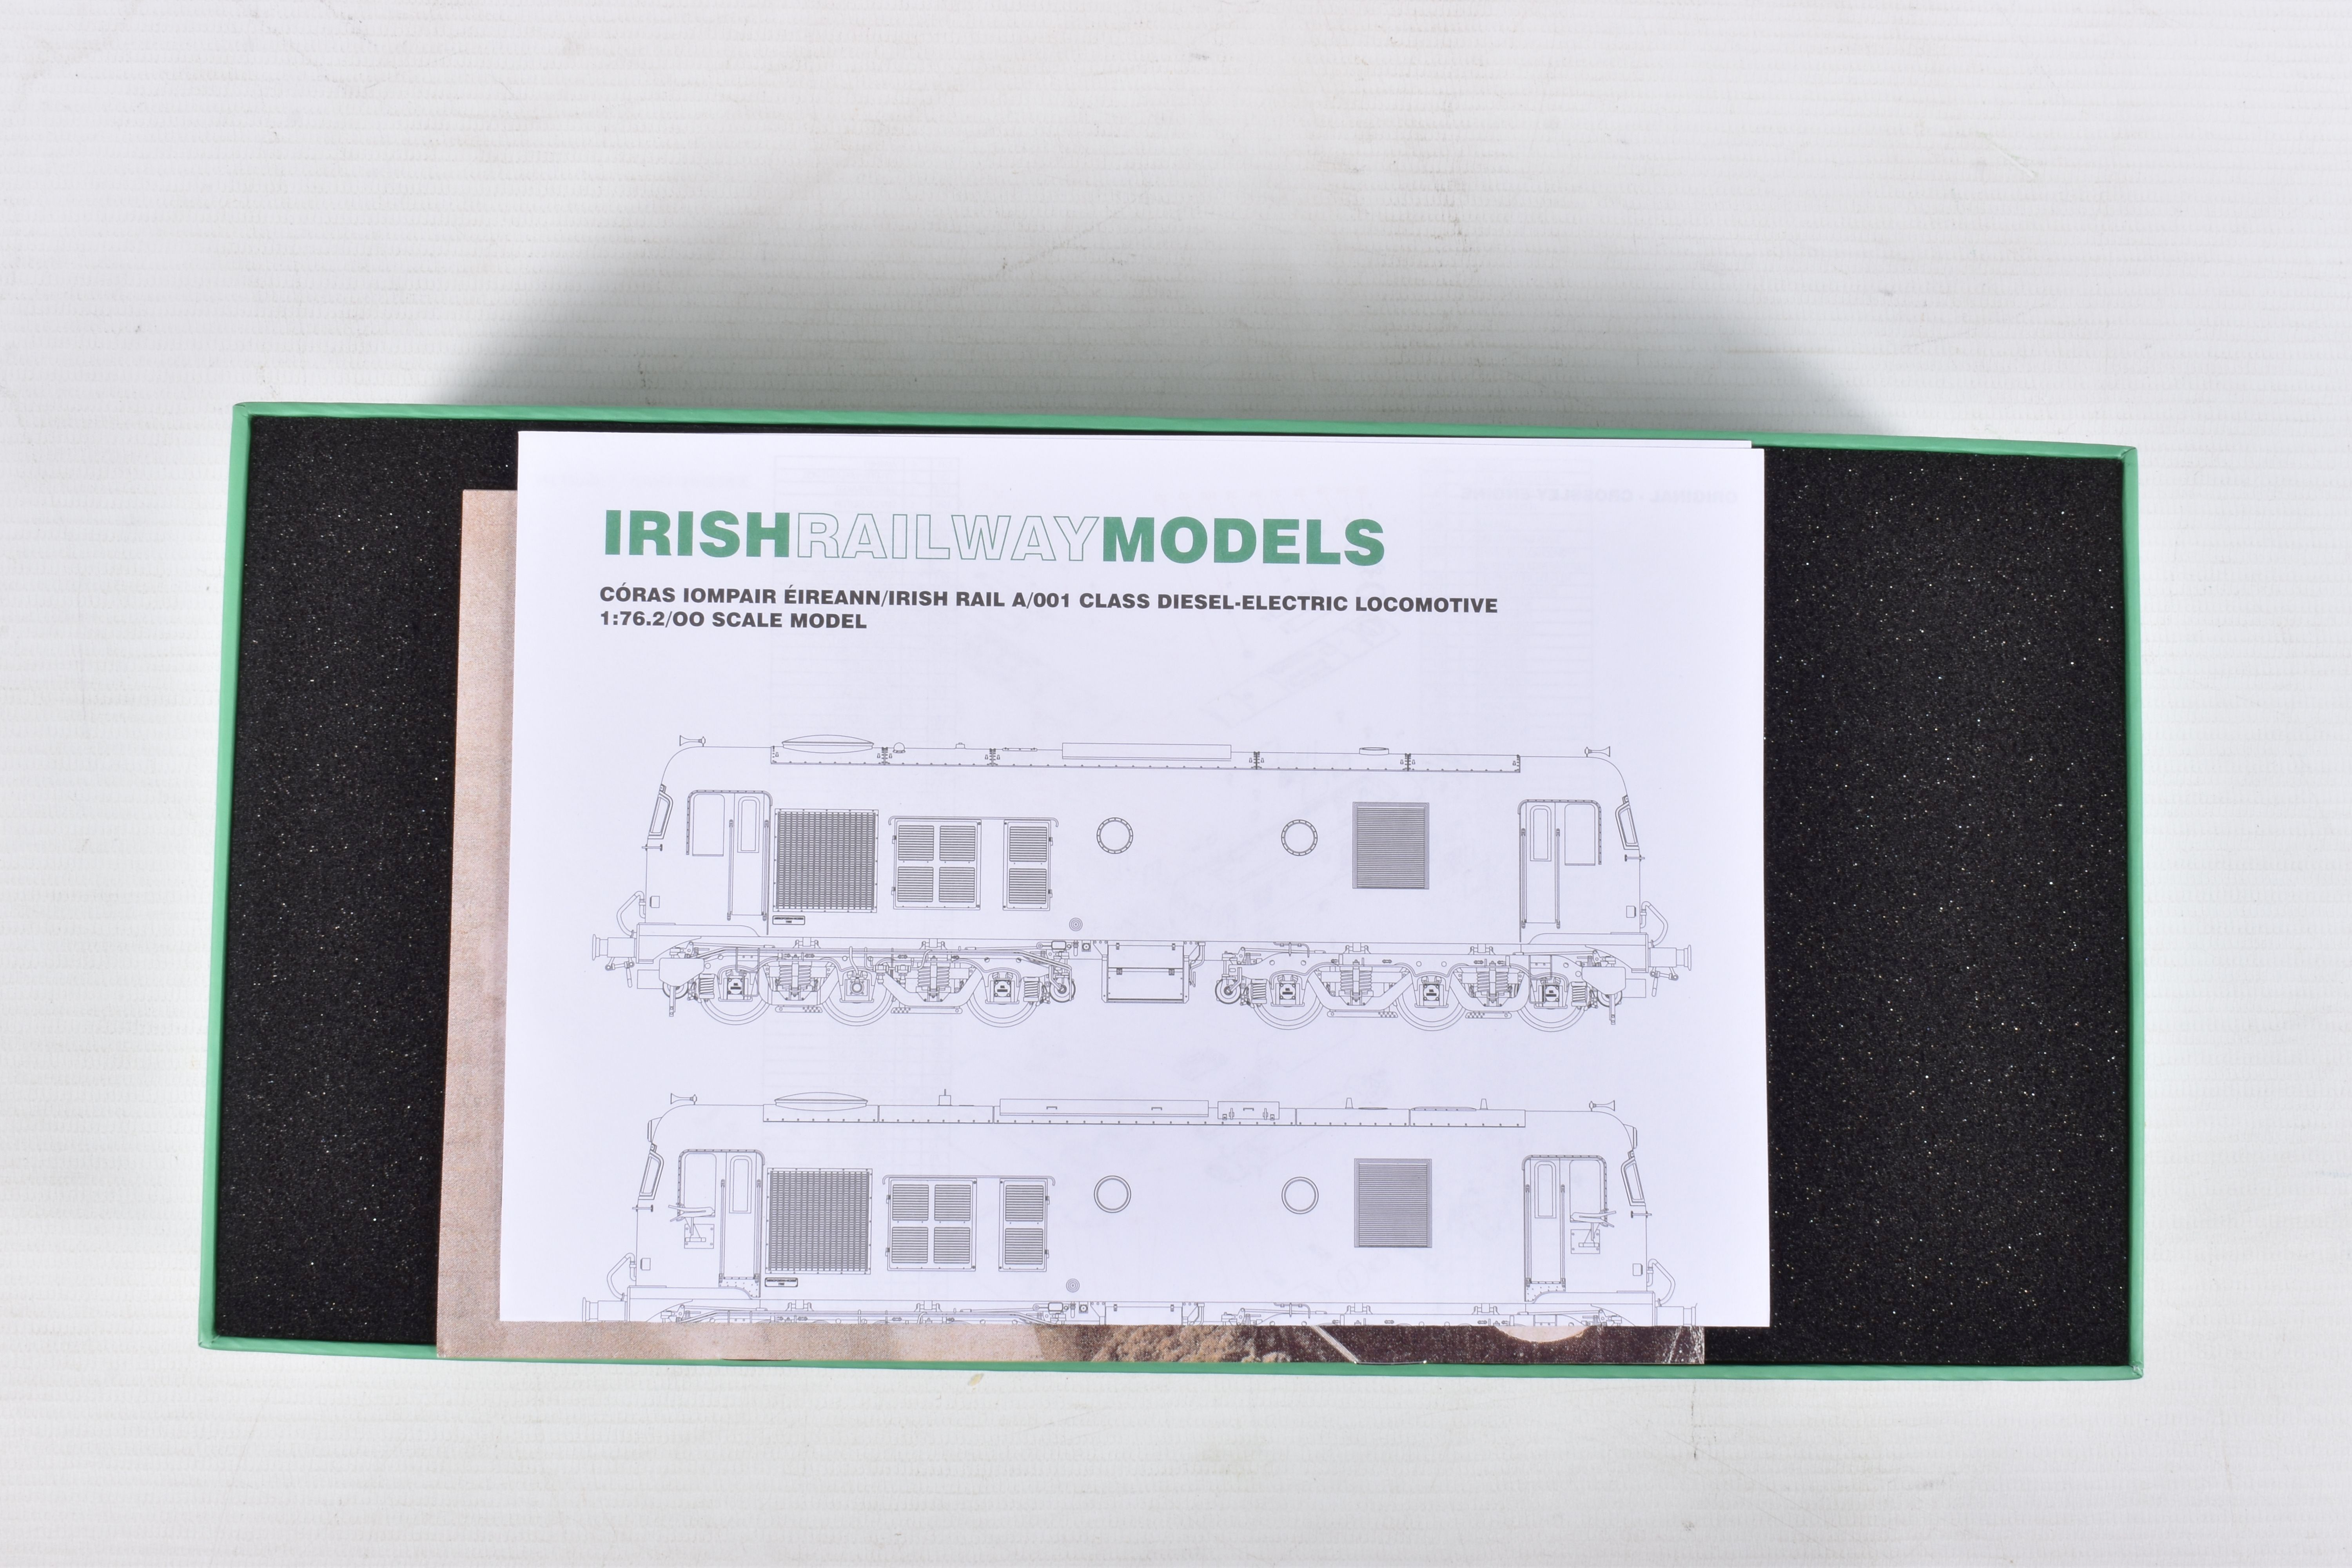 A BOXED IRISH RAILWAY MODEL RAILWAY DIESEL-ELECTRIC LOCOMOTIVE OO GAUGE, A-001 Class, running no. - Image 3 of 4